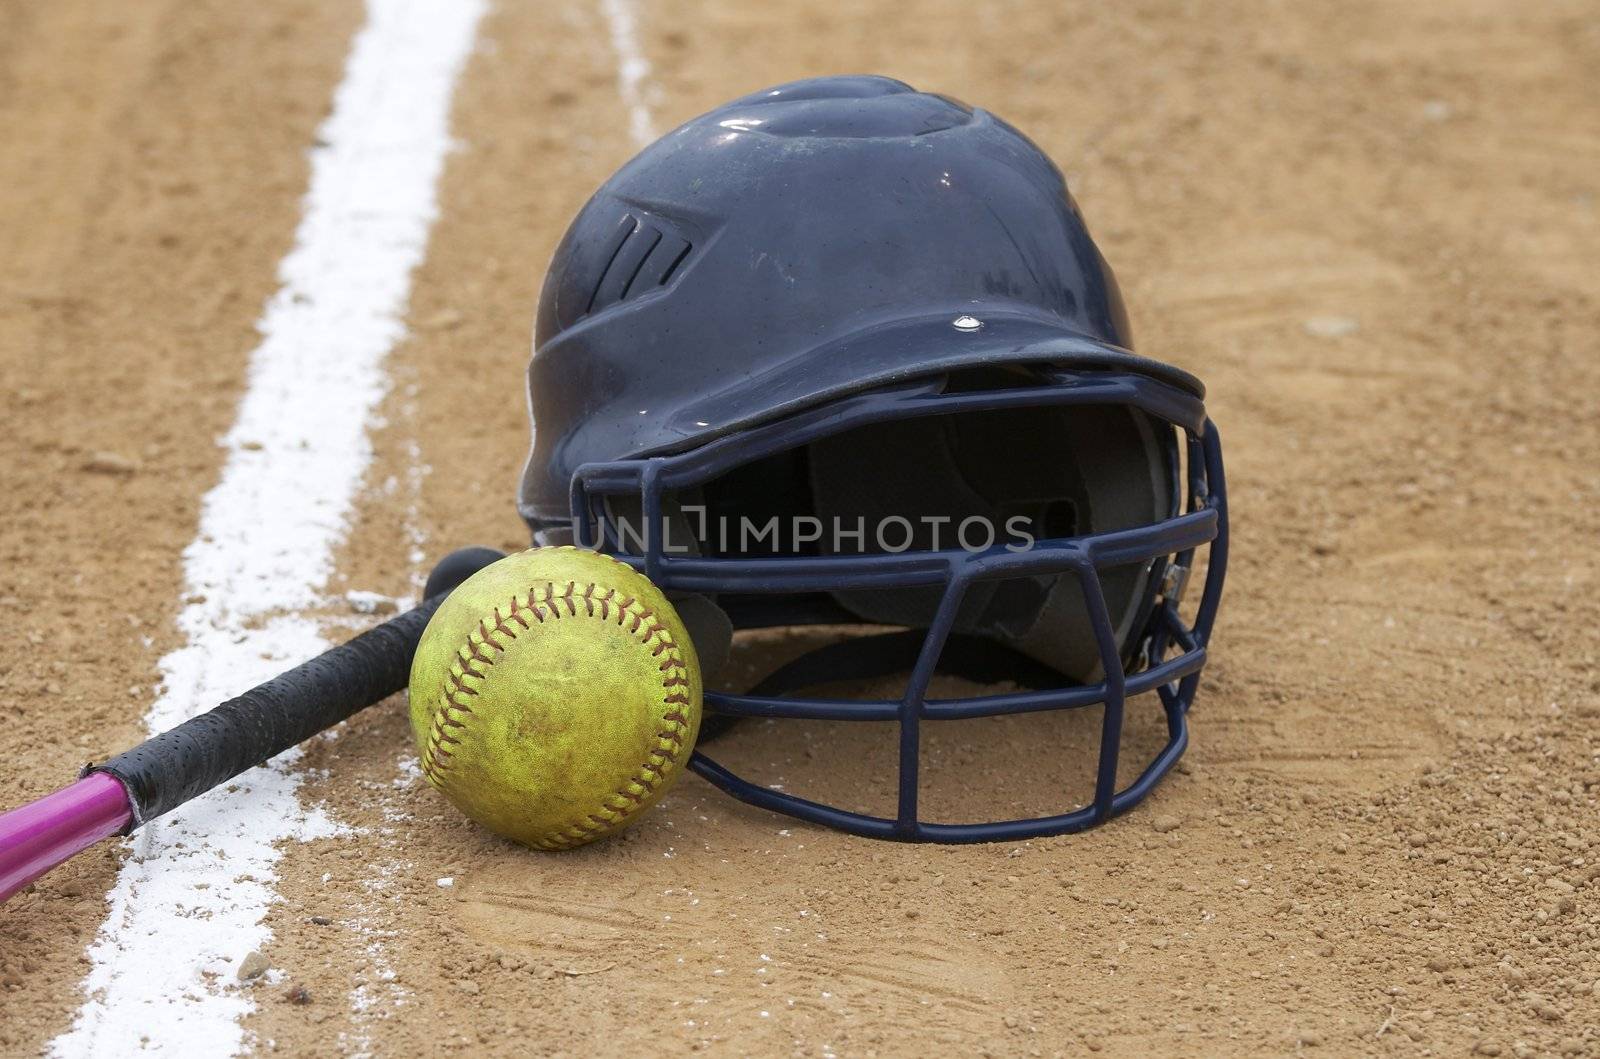 a bat, softball, and helmet on a sports infield